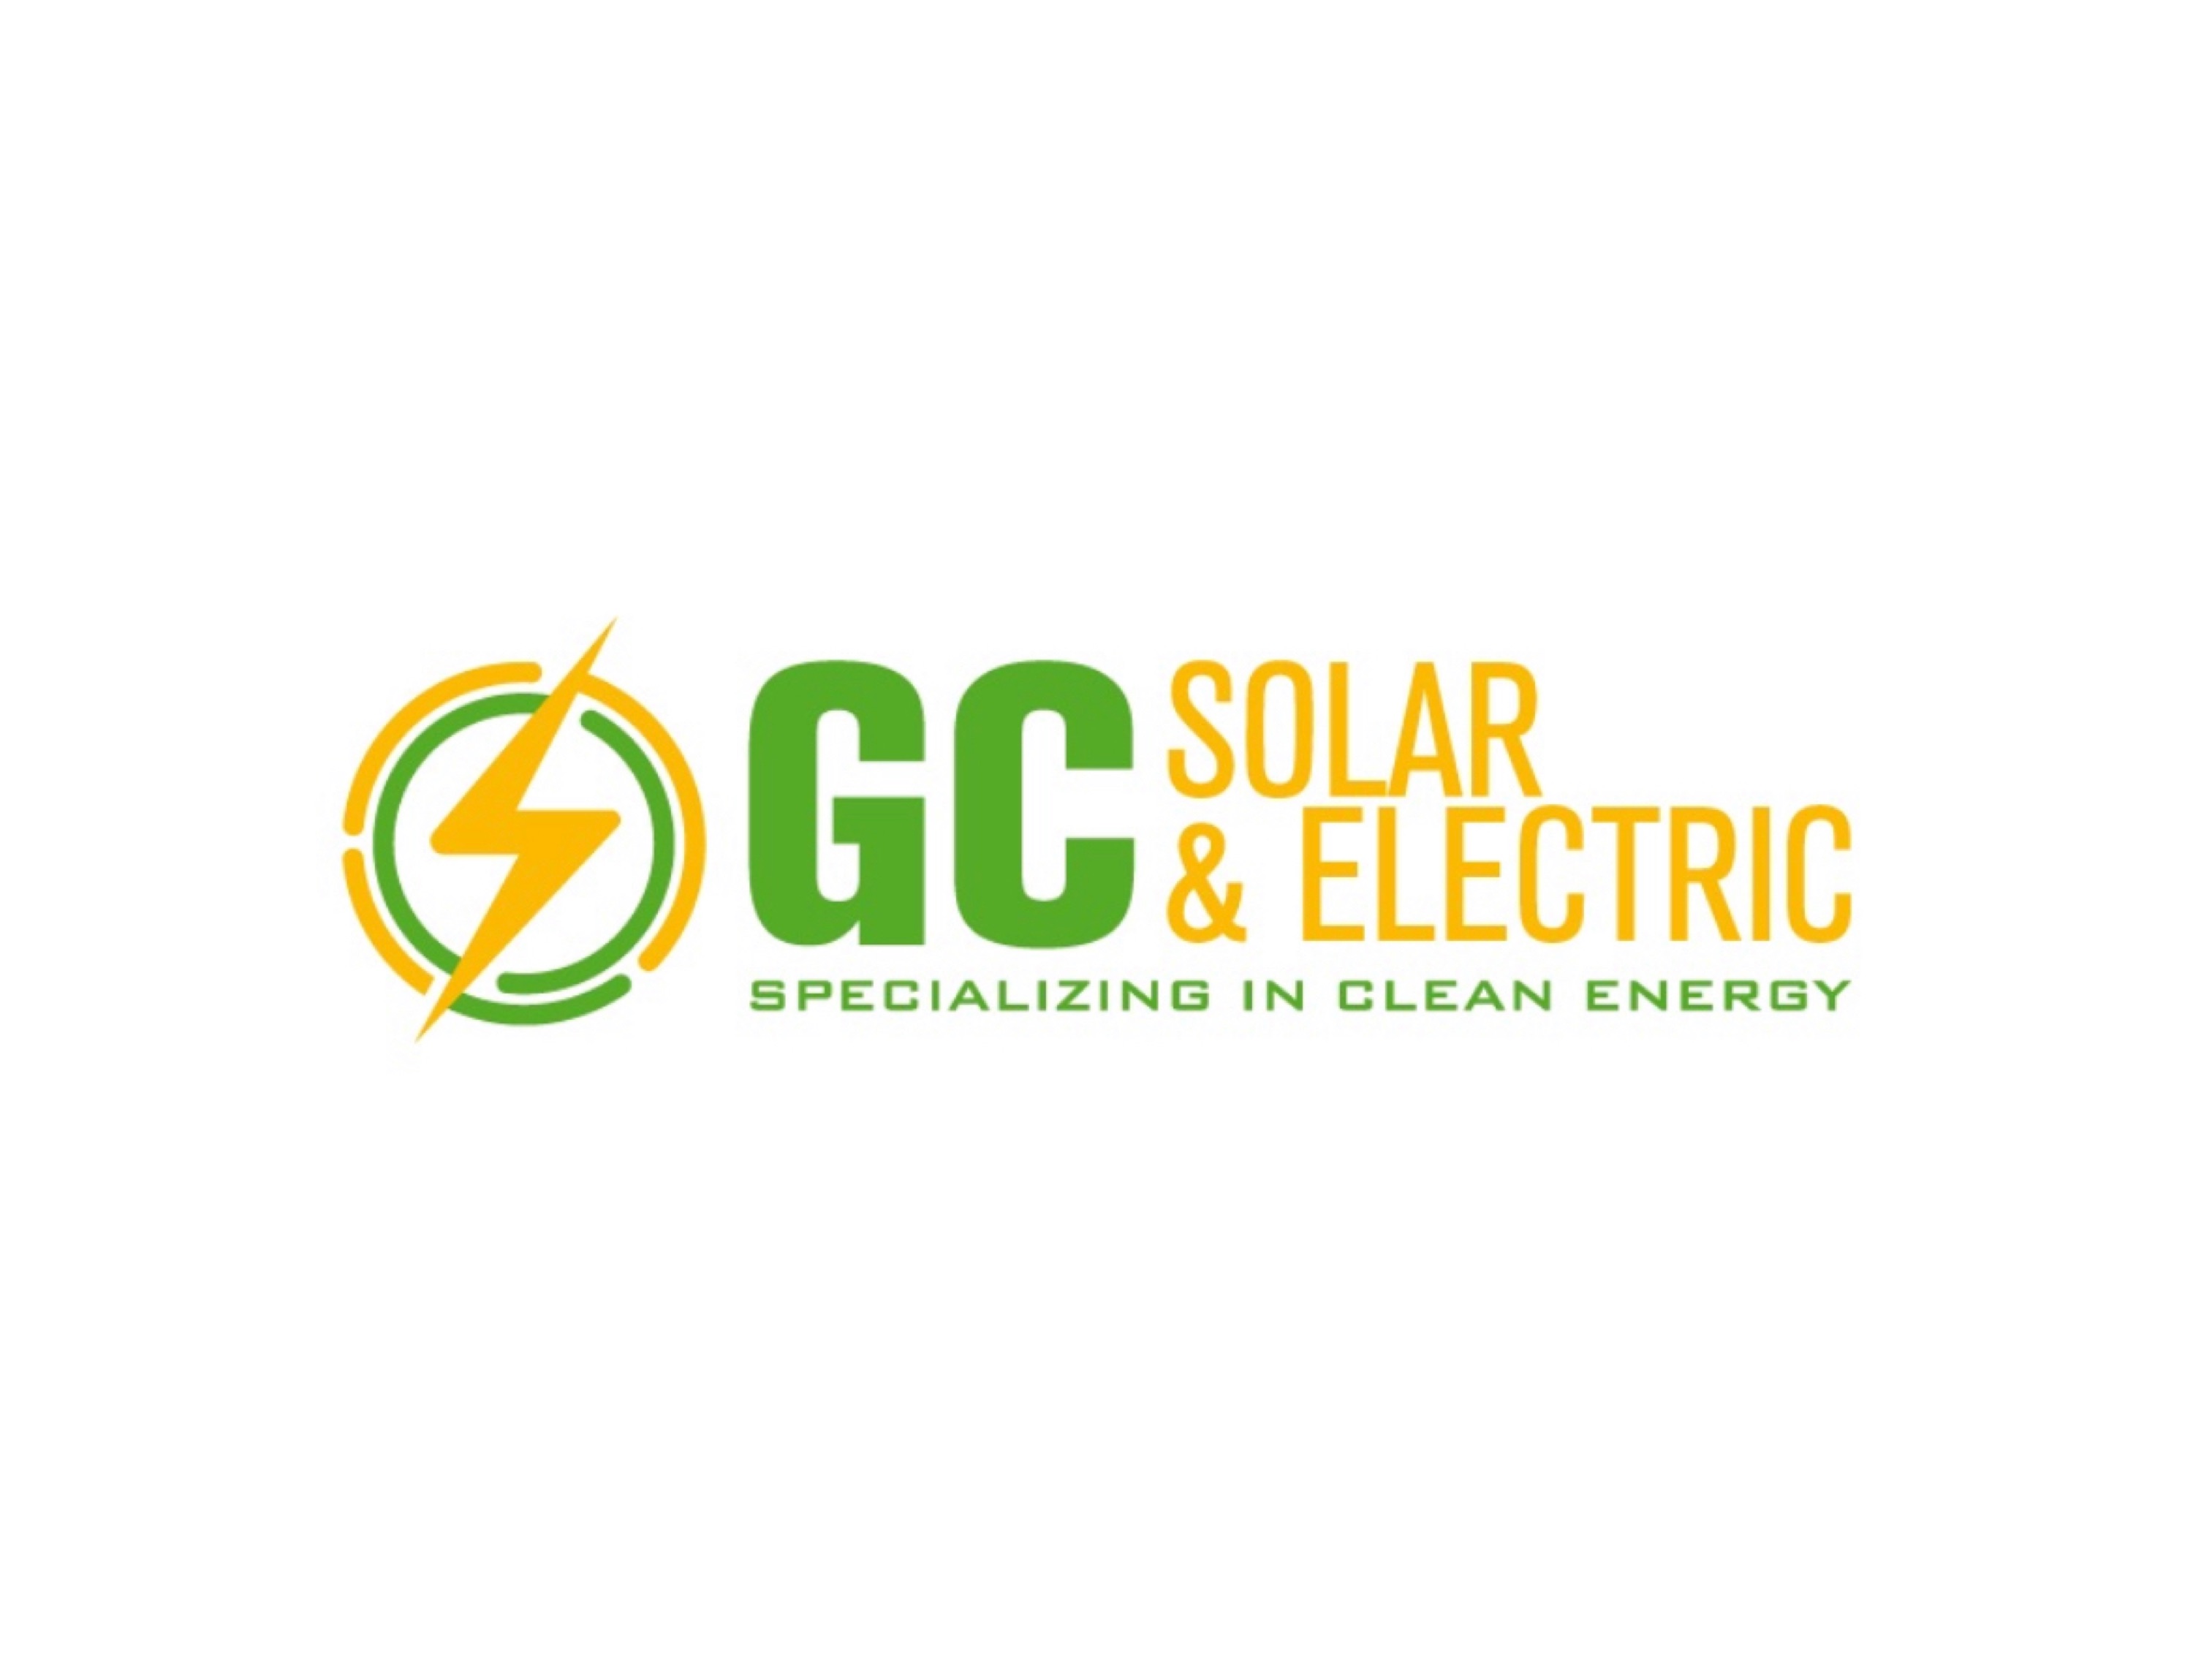 GC Solar and Electric, LLC Logo